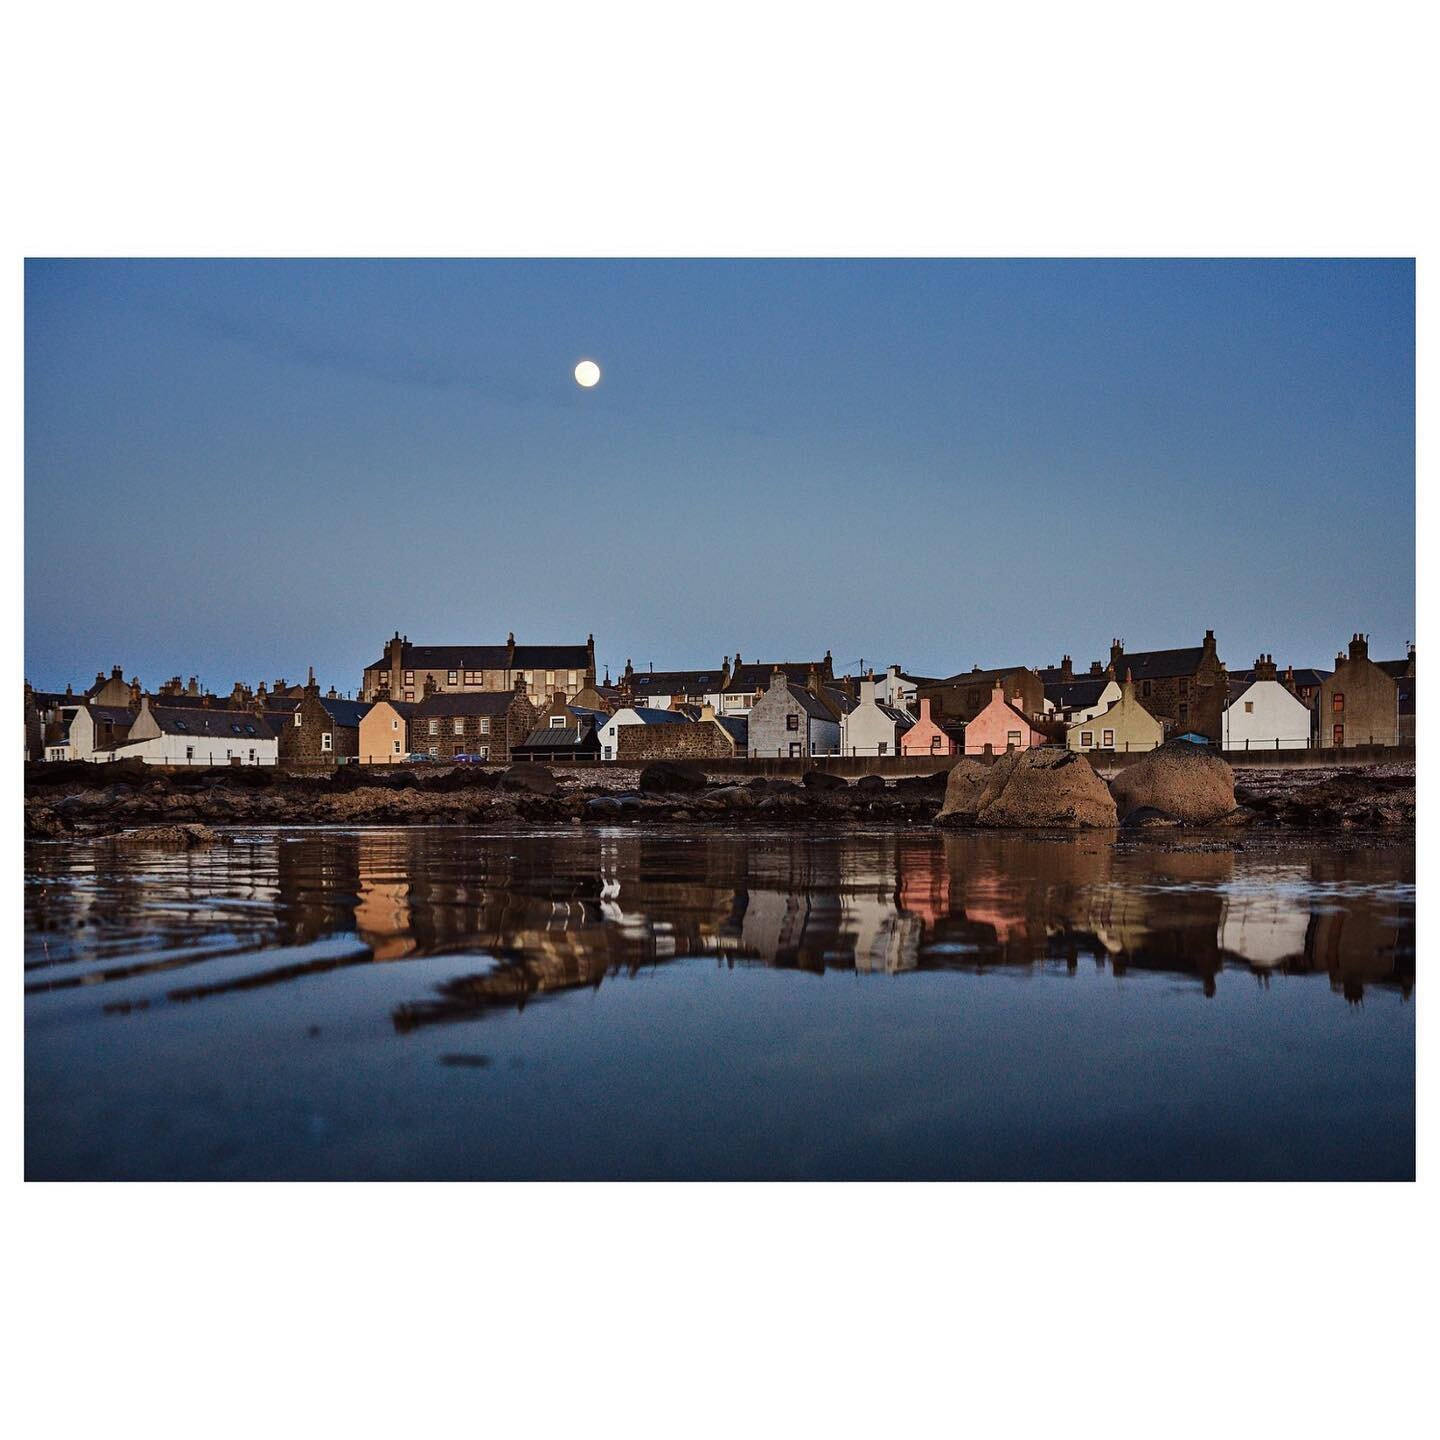 Moonrise Over the village ... Whitehills - Aberdeenshire #colour #beachlife #life #winter #igers  #simple #aberdeenshire #instagood  #photooftheday #colour  #cold  #scotspirit #igers #35mm #instadaily #scotland #winterwalks #whitehills #beachisbest #